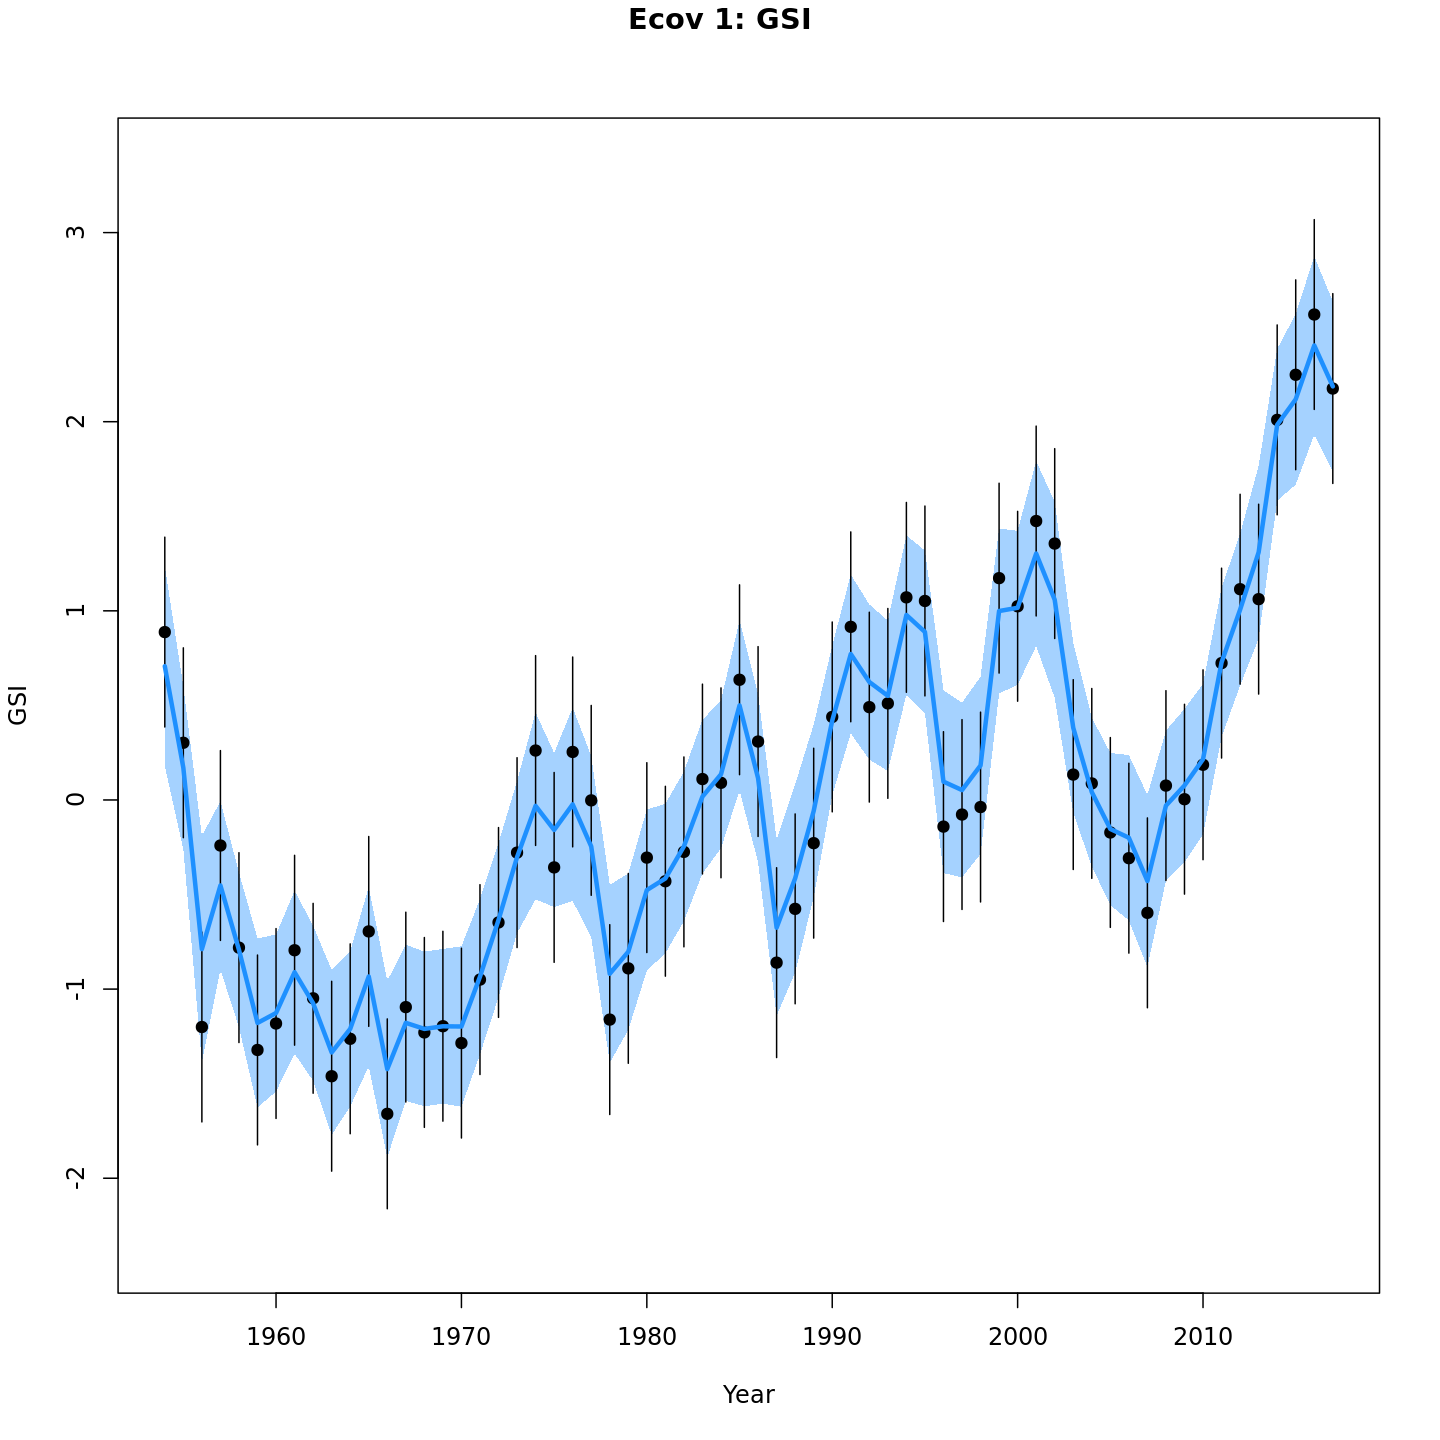 Gulf Stream Index (GSI) time-series model, m13.